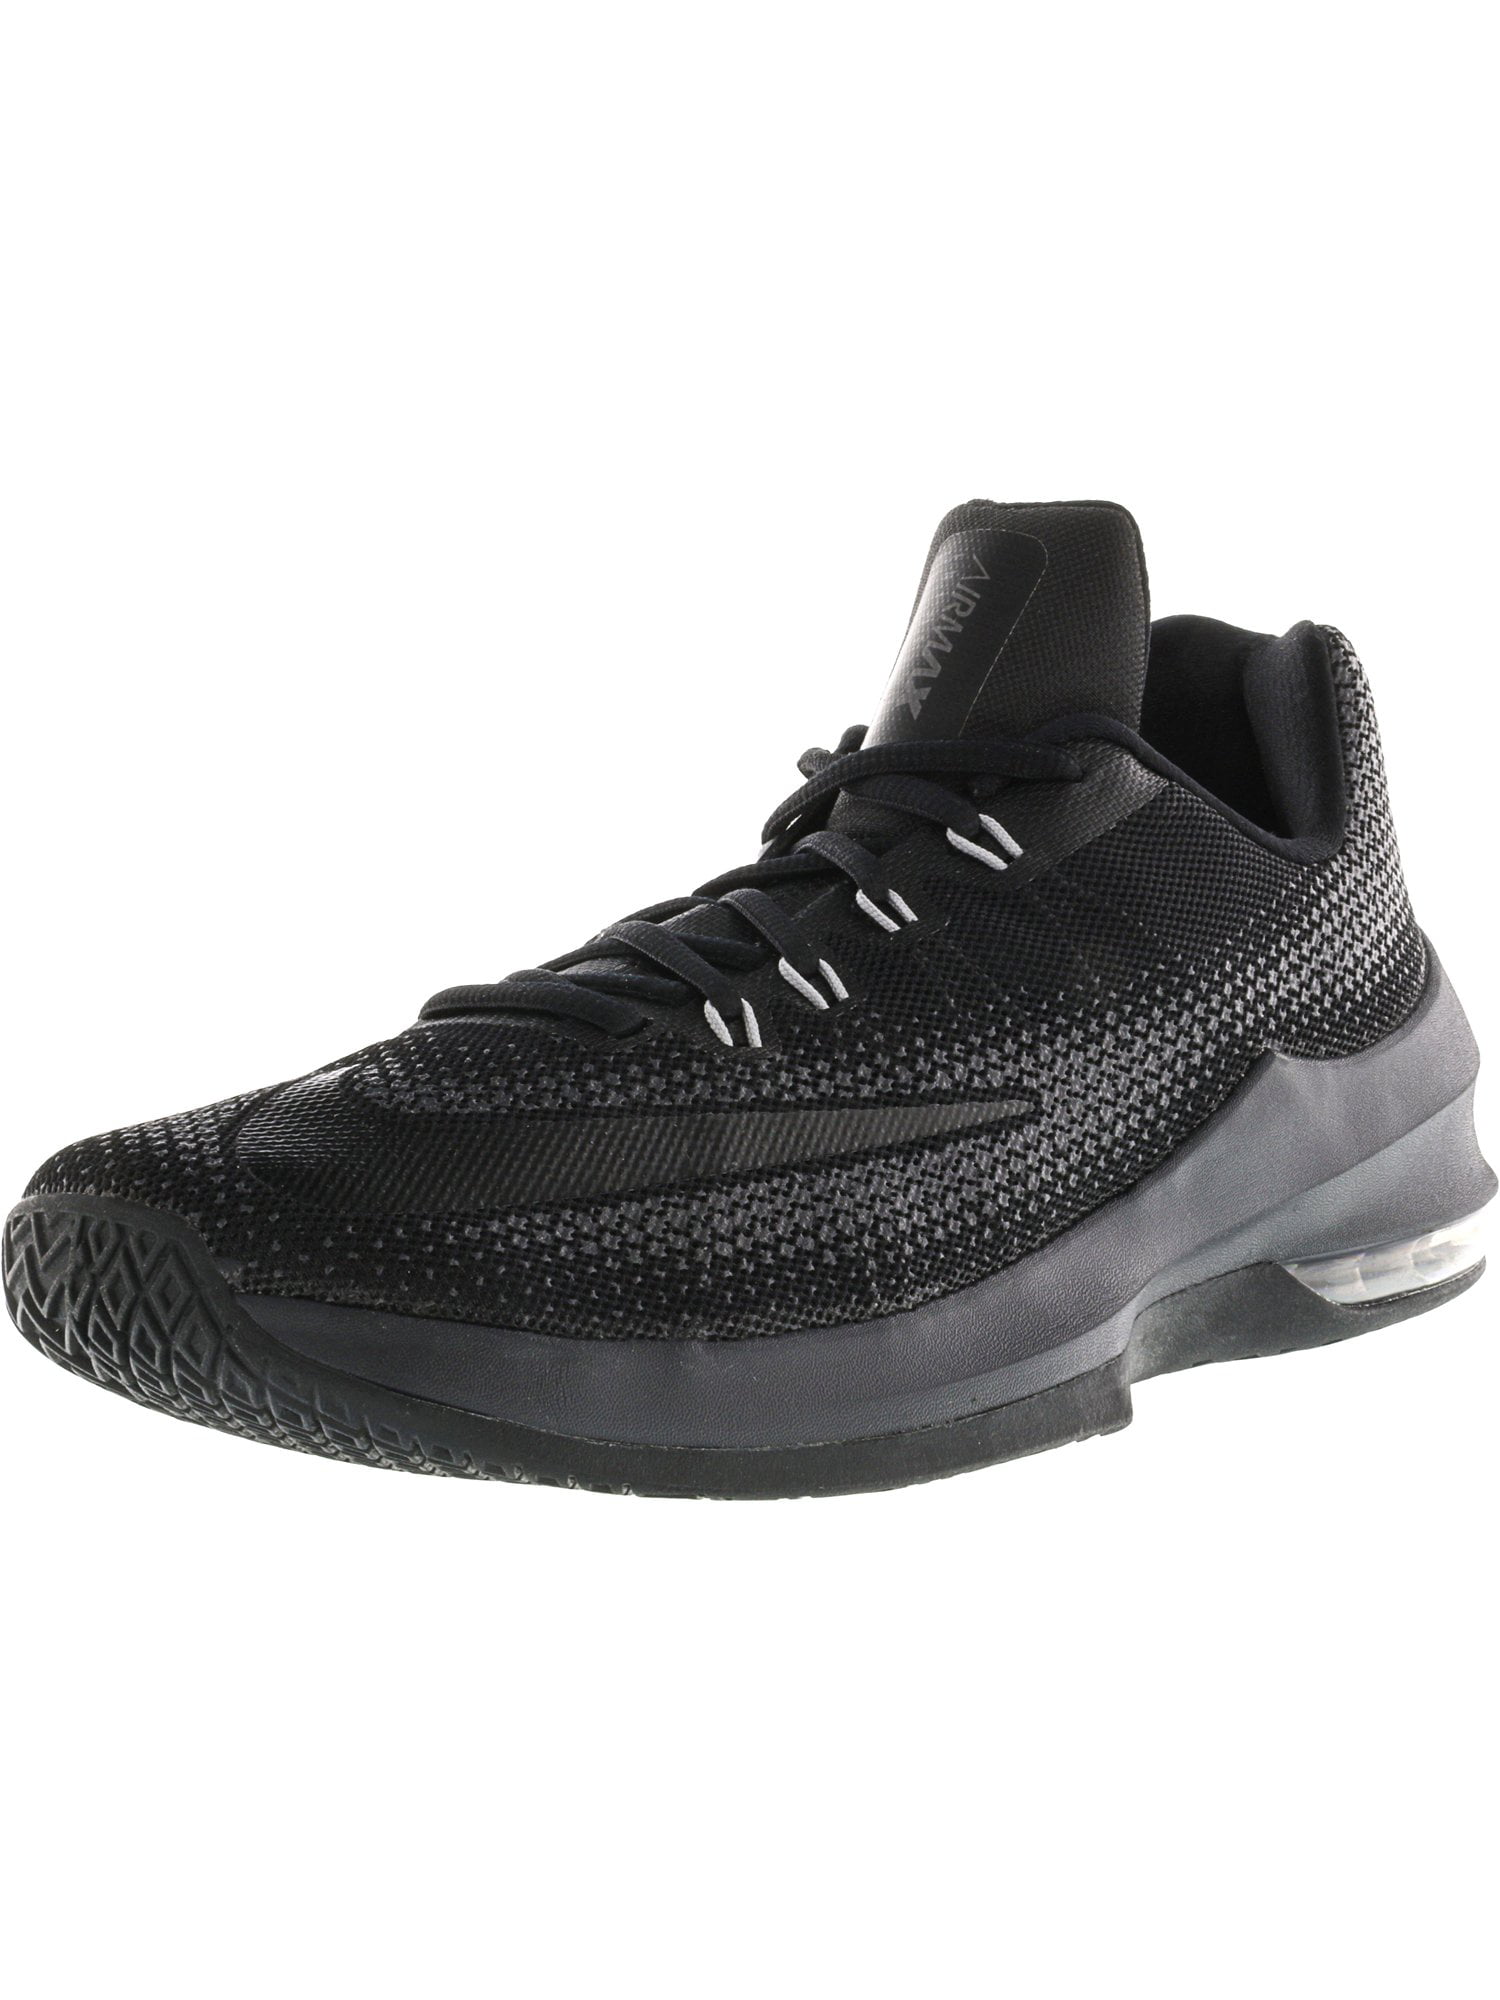 Nike Men's Air Max Low Black / White-Gym Red-Dark Grey Ankle-High Basketball Shoe 9.5M - Walmart.com